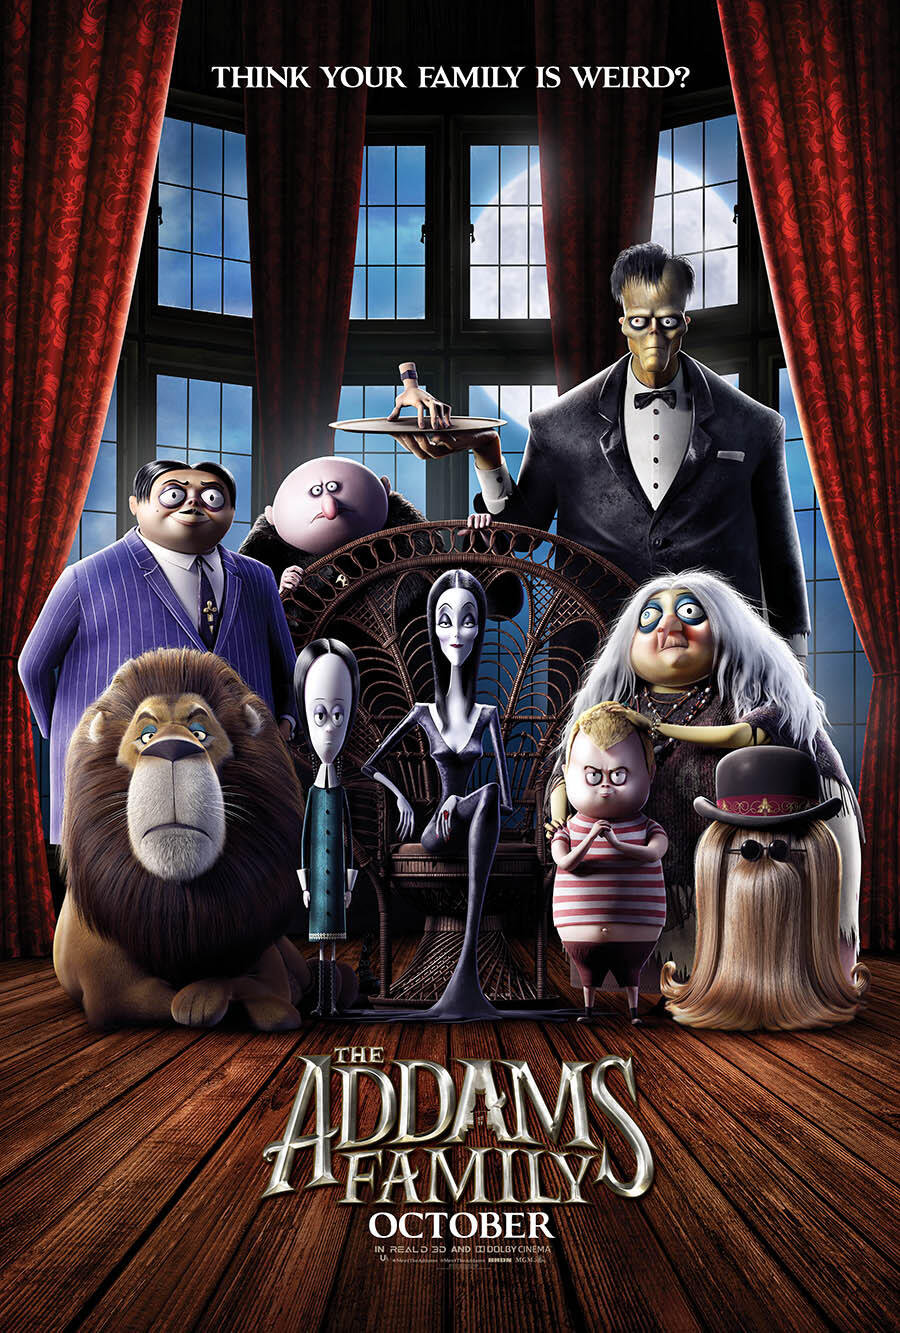 The Addams Family (2019) Movie Photos and Stills | Fandango